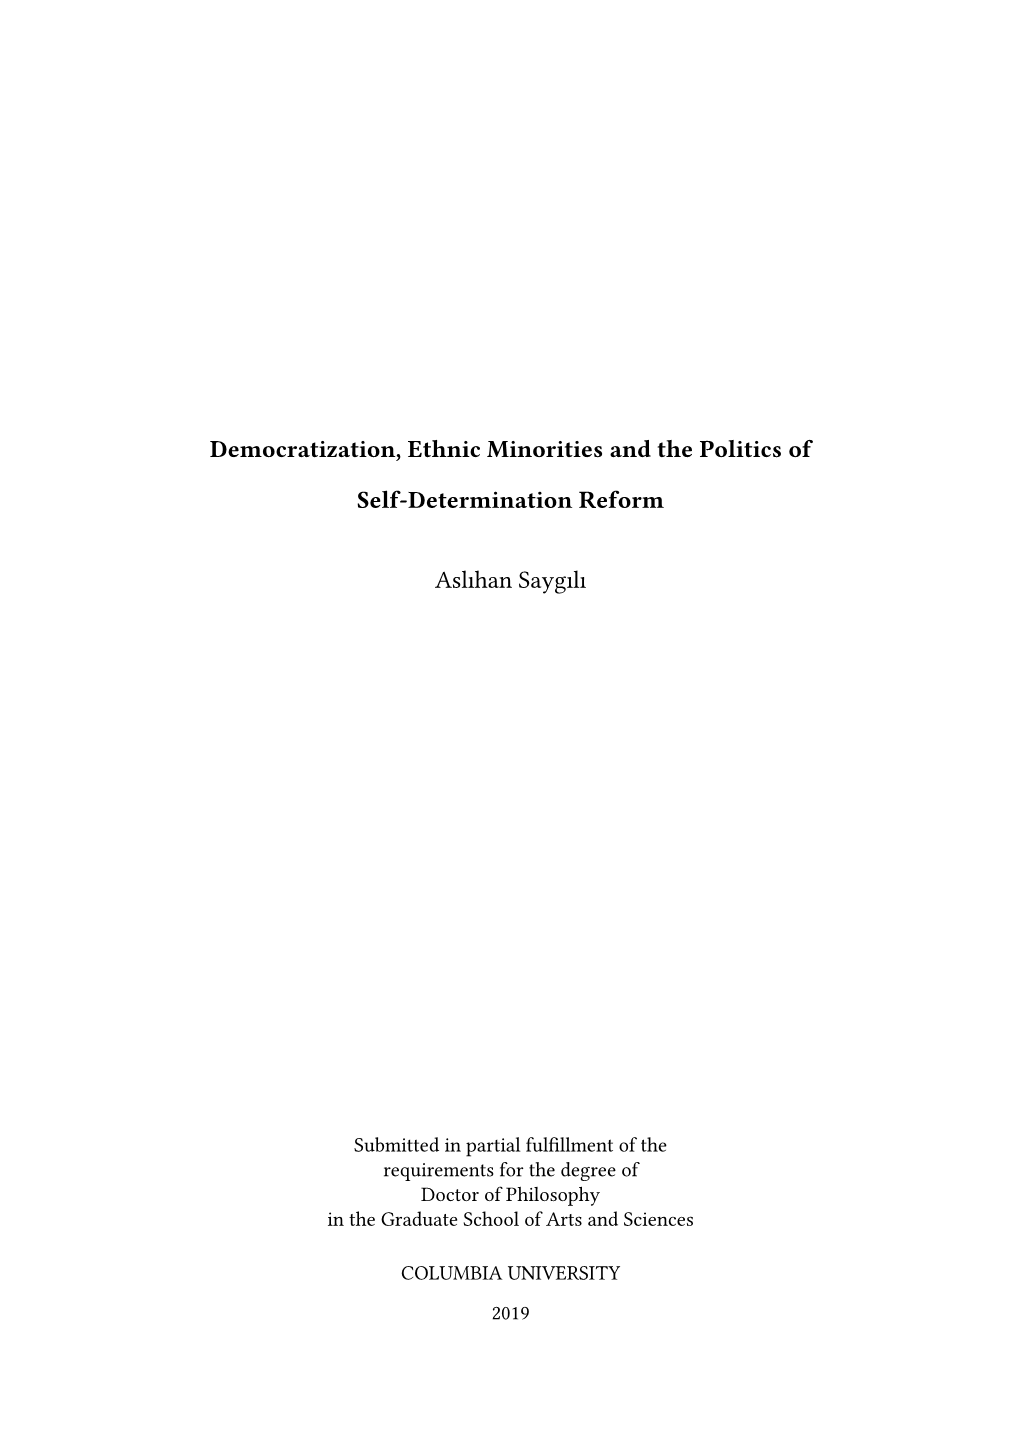 Democratization, Ethnic Minorities and the Politics of Self-Determination Reform